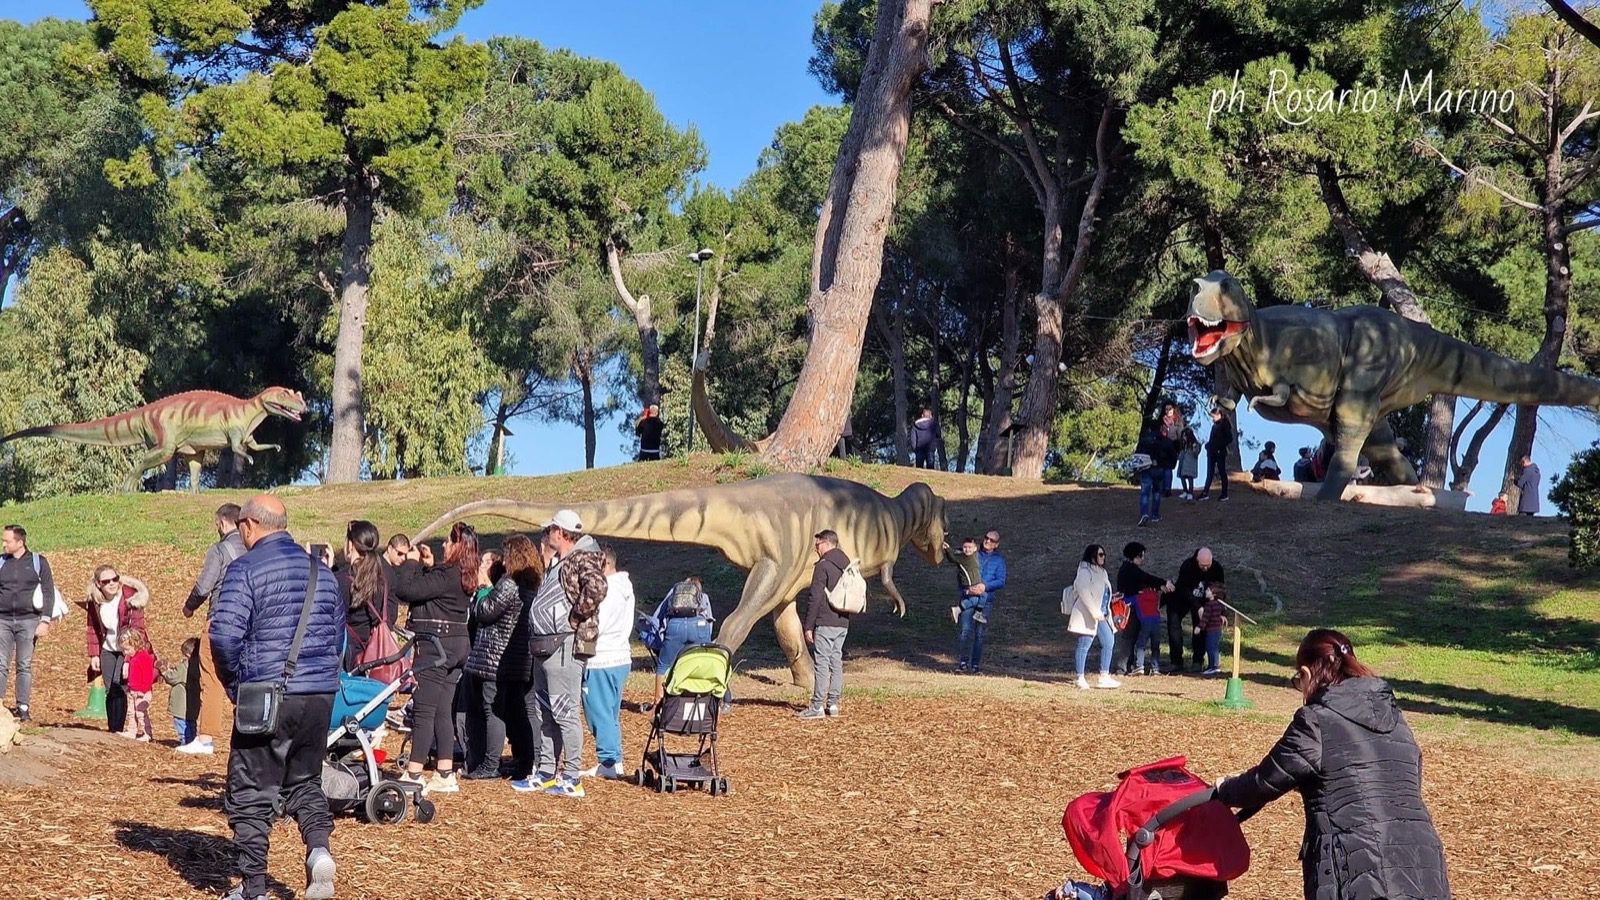 Parco dei Dinosauri di Capaccio Paestum: oltre 13mila i visitatori in un mese